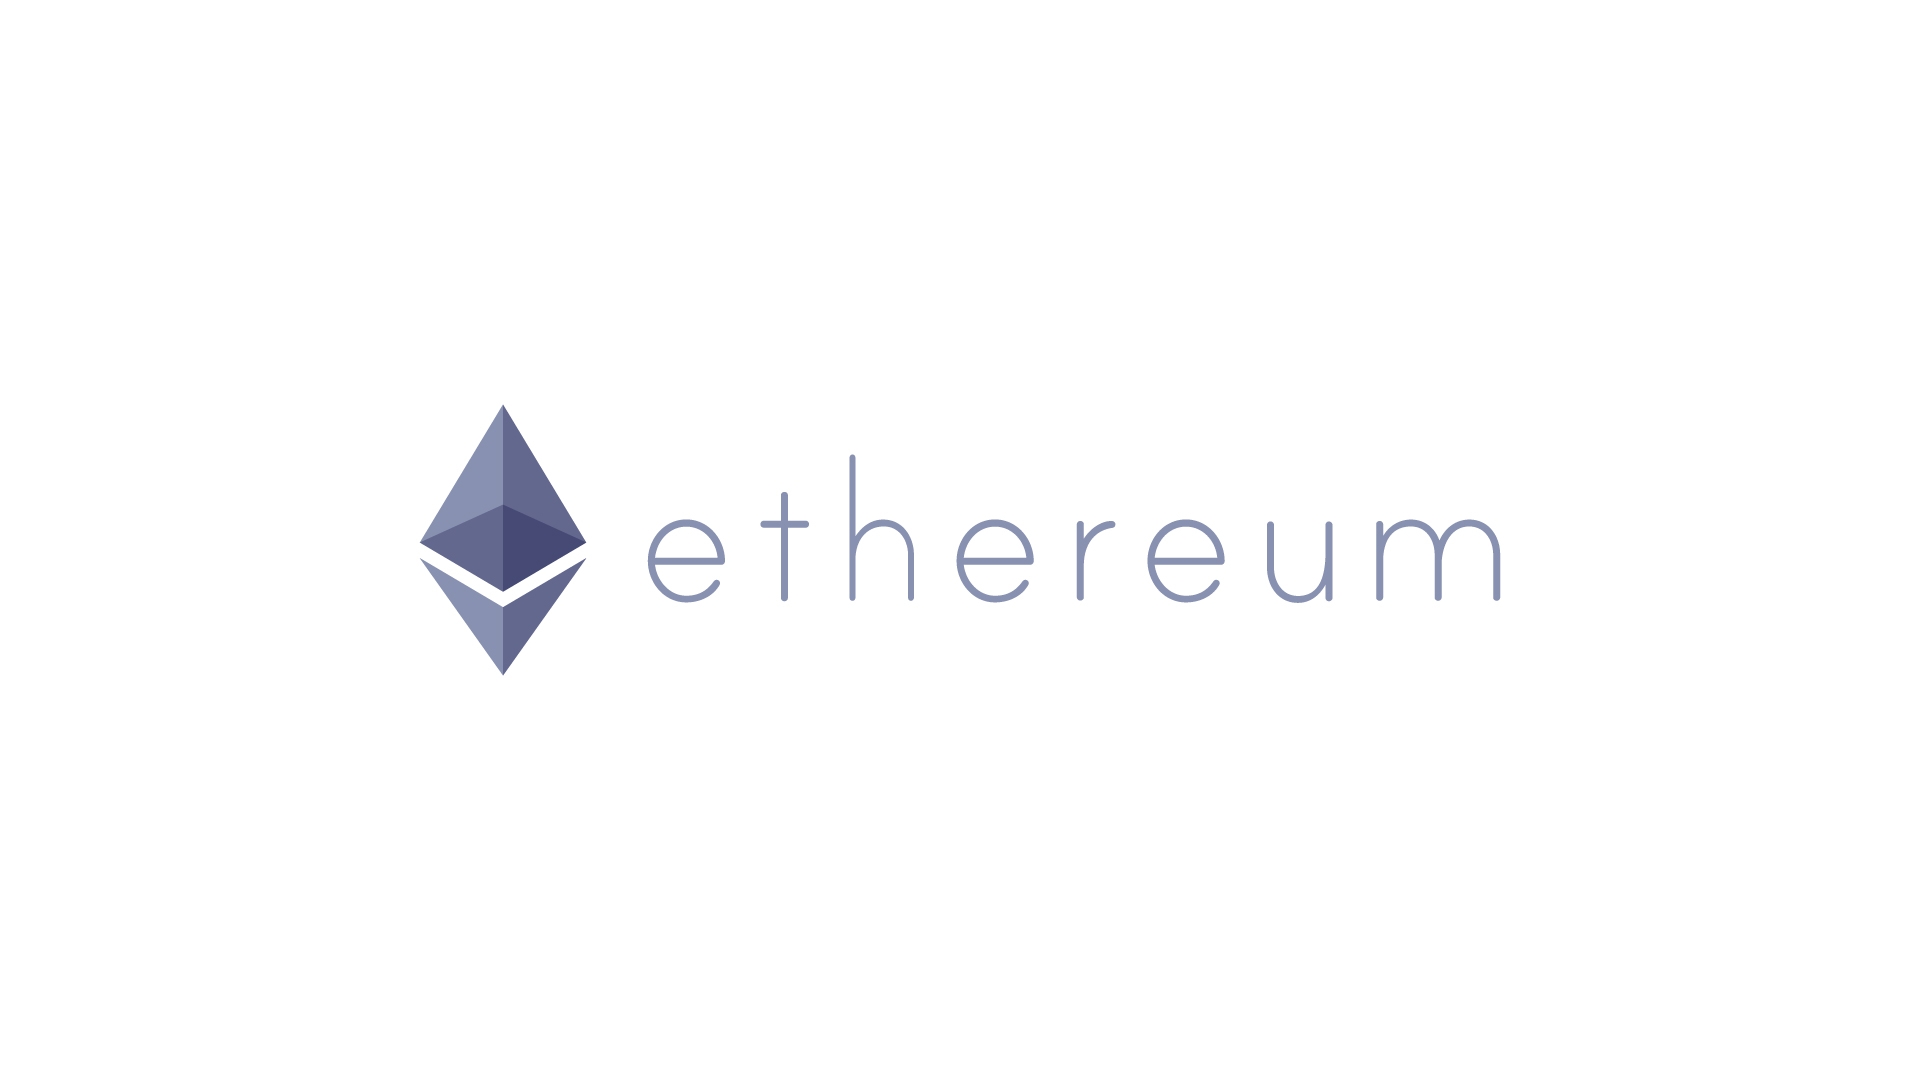 Ethereum brand assets - ethereum.org